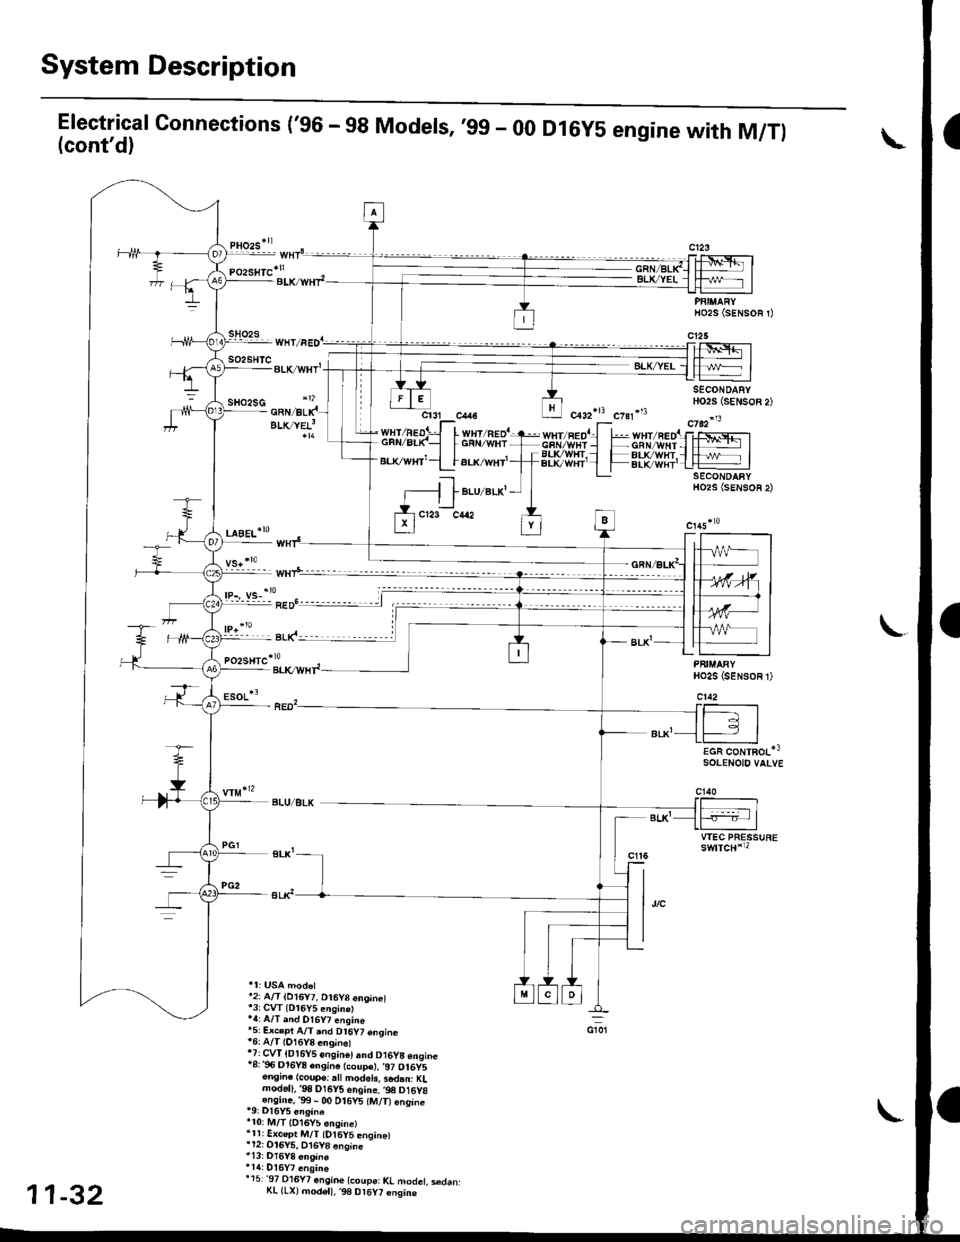 HONDA CIVIC 1996 6.G Owners Guide System Description
Electrical Connections (96 - 98 Models, ,99 - 00 Dl6y5 engine with M/T)(contd)
ptozs"
pozslttc*rr
WHT,REDl
s02sHTc-BLK/WHT
aLKlyeL!
LraeL*ro
pozsntc*lu
:soL*3
BLU/ALK
12: A/T (